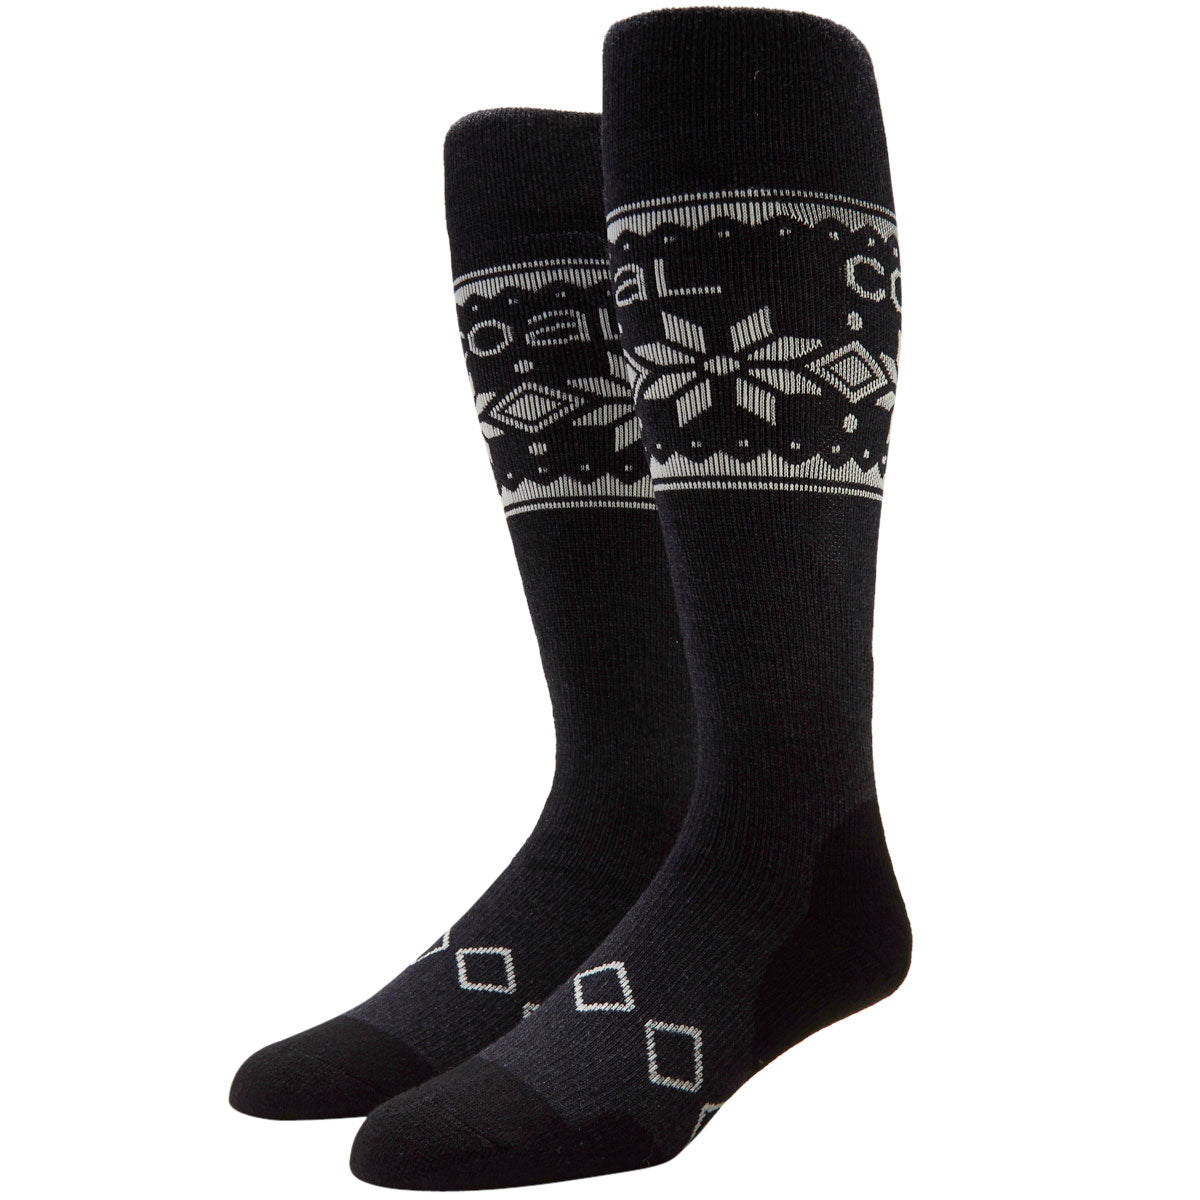 Coal Midweight Snowboard Socks - Black image 1